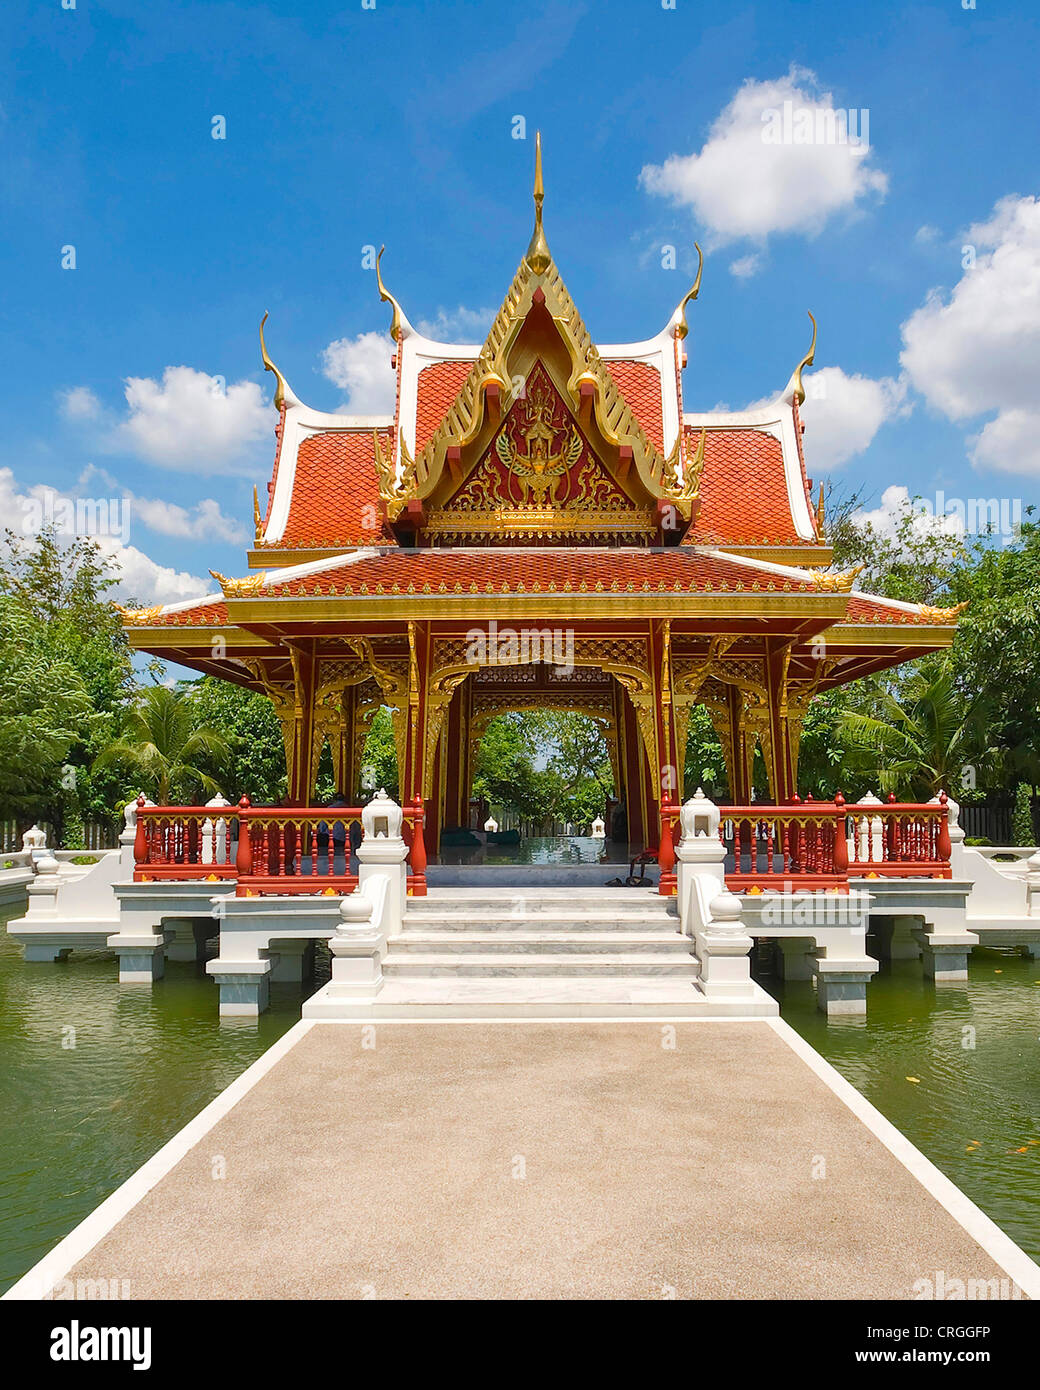 Thailand Kultur Center, pavilion in a pond, Thailand, Bangkok Stock Photo